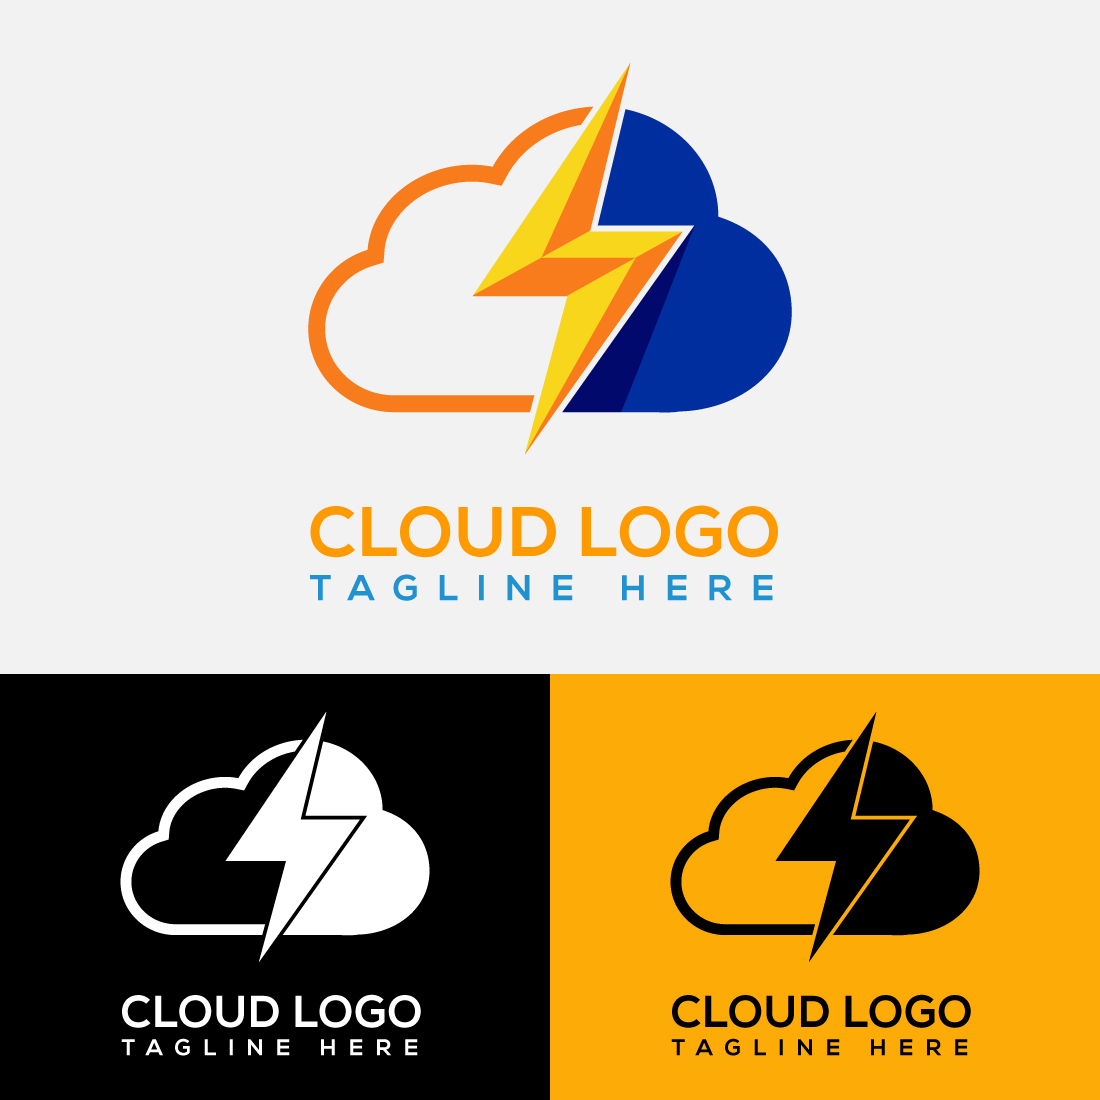 Modern Cloud Technology Vector Logo Design cover image.